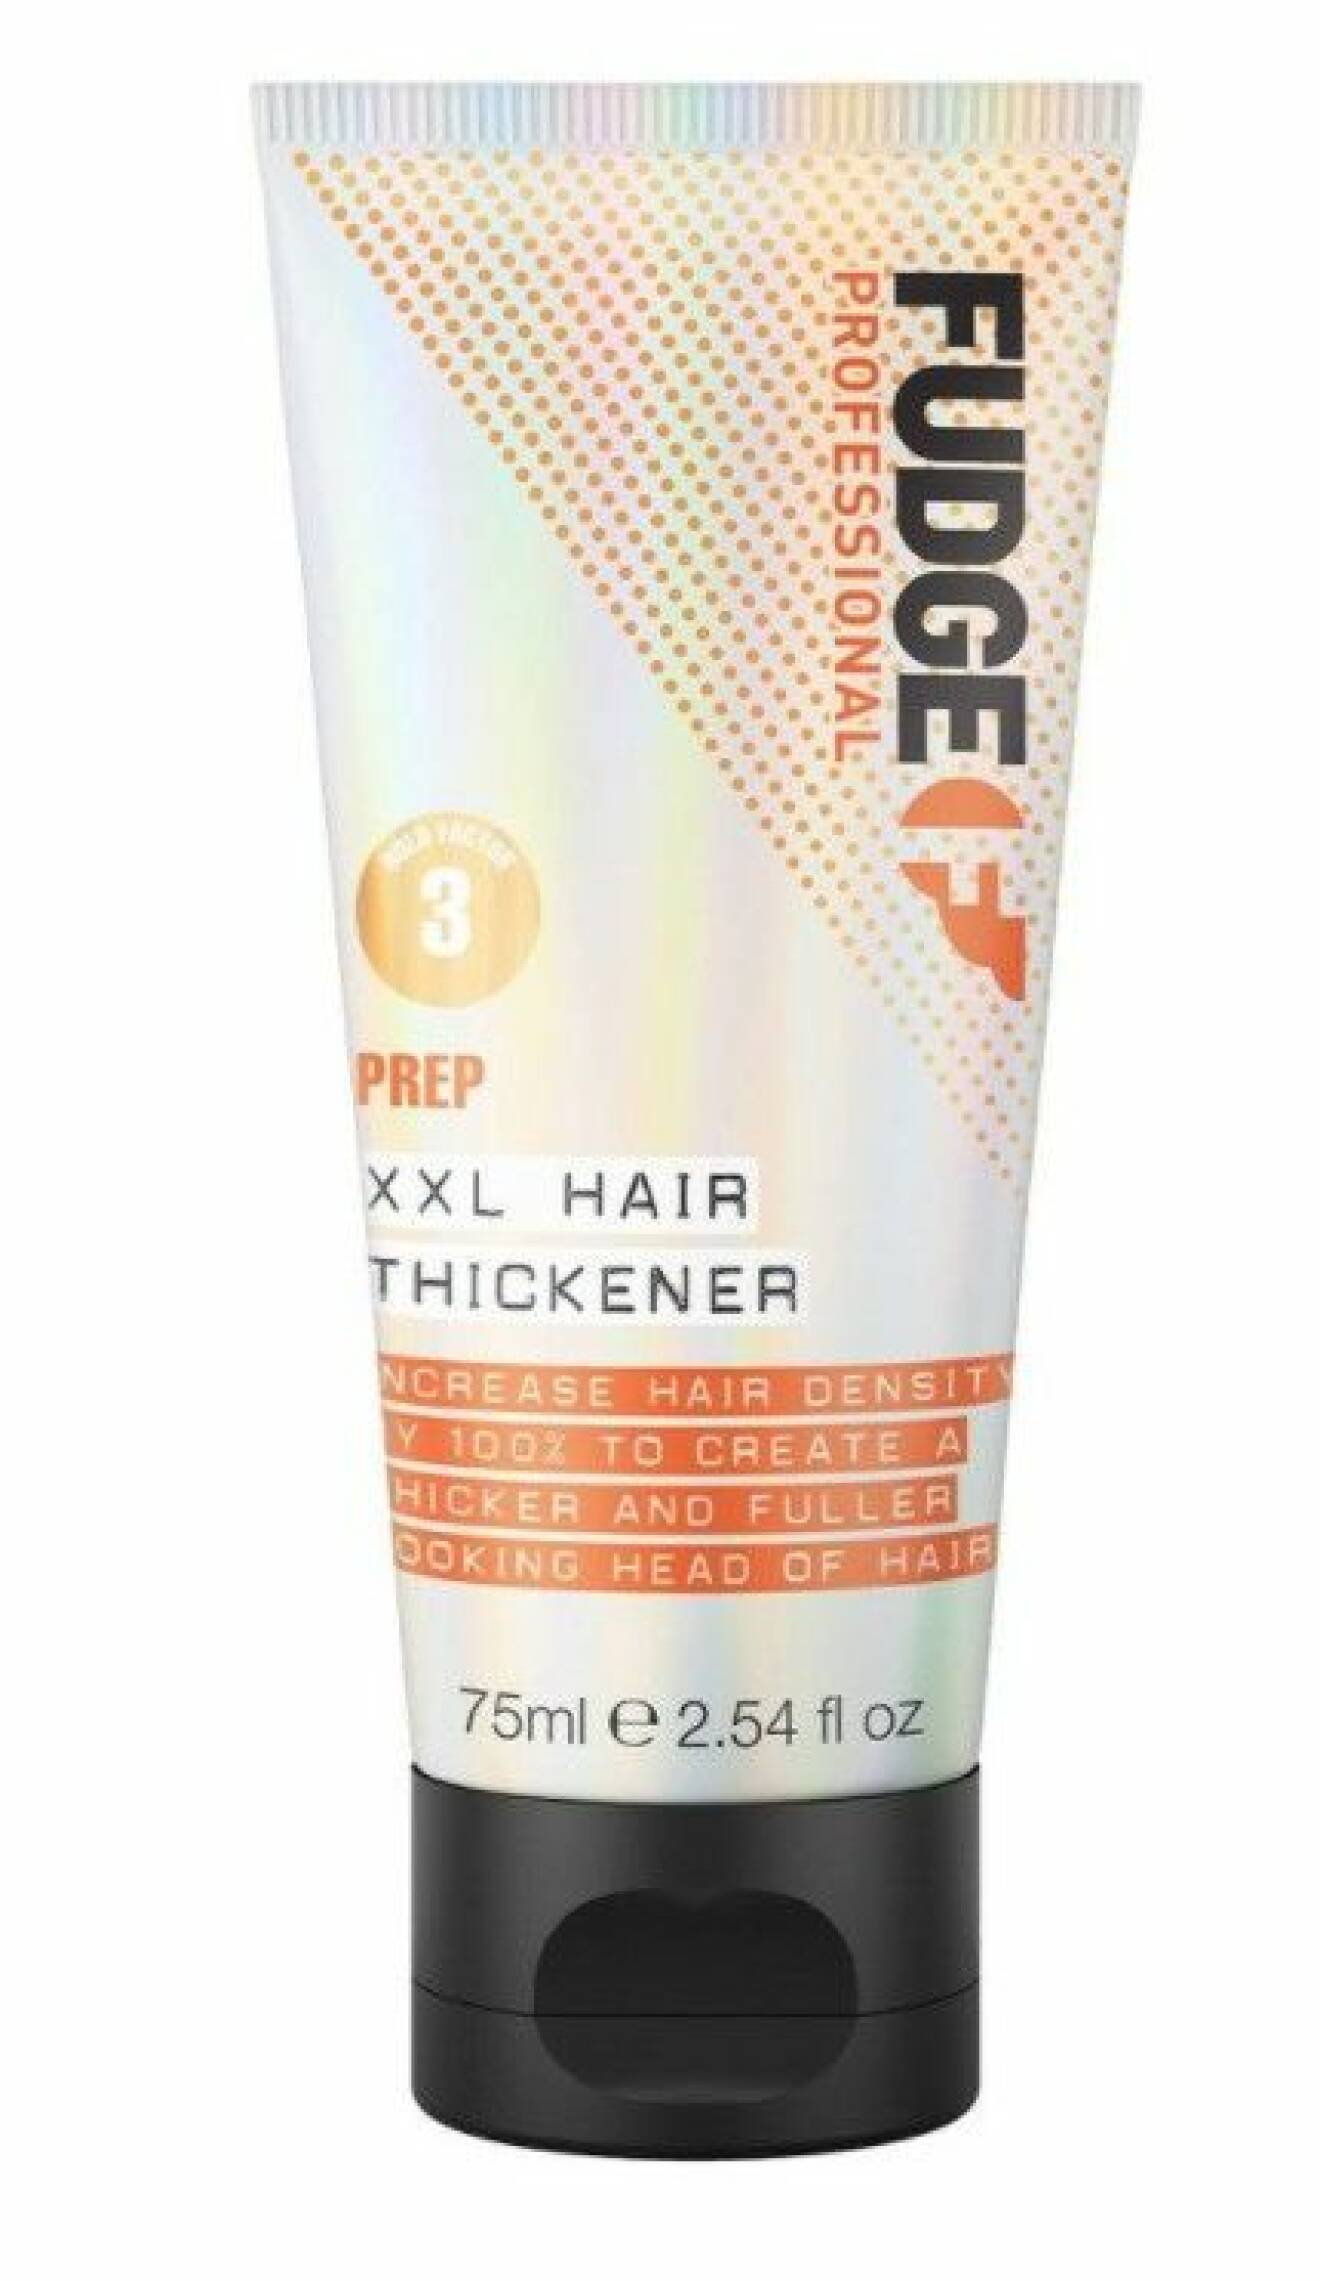 XXL Hair Thickener